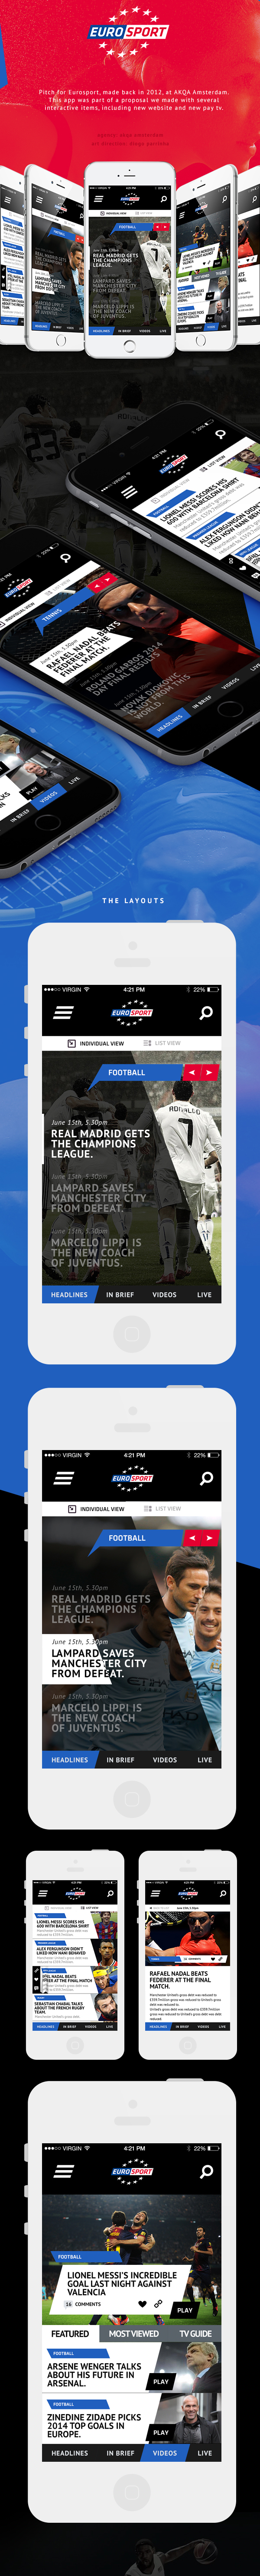 Eurosport sport app interactive mobile akqa football soccer tennis f1 Rugby basket